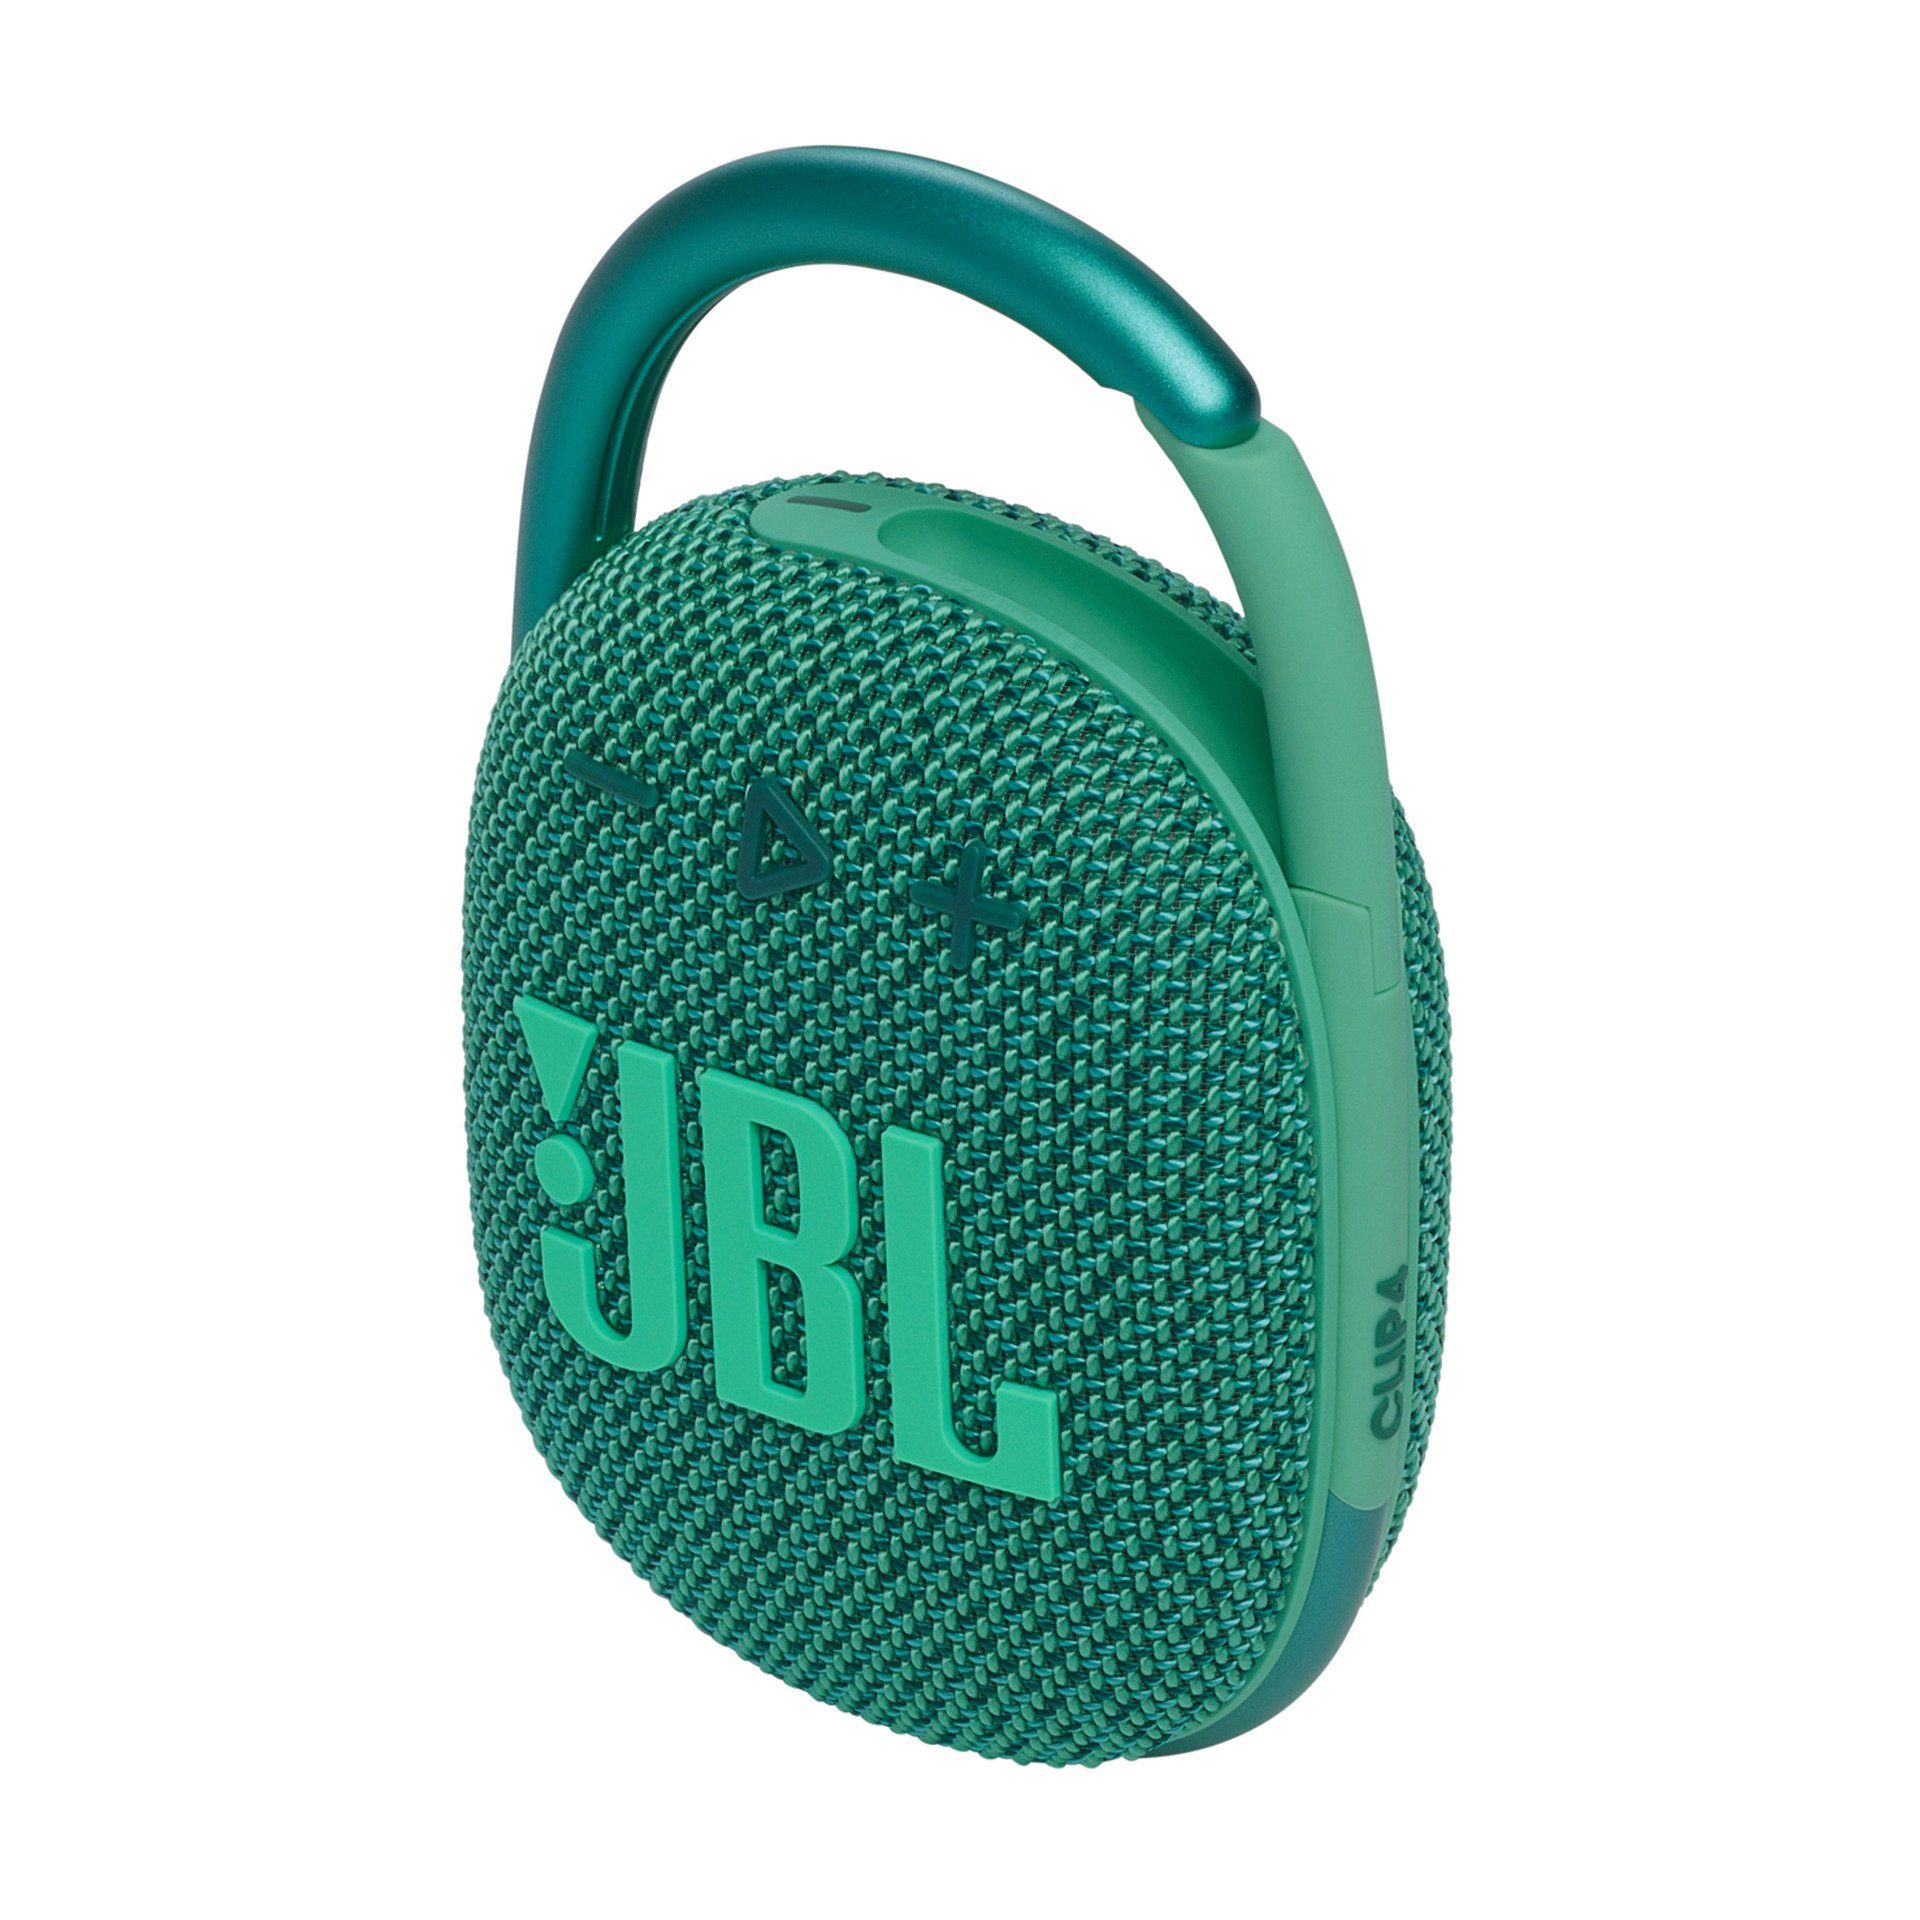 W) JBL Bluetooth-Lautsprecher Clip ECO 5 Grün 4 (Bluetooth,